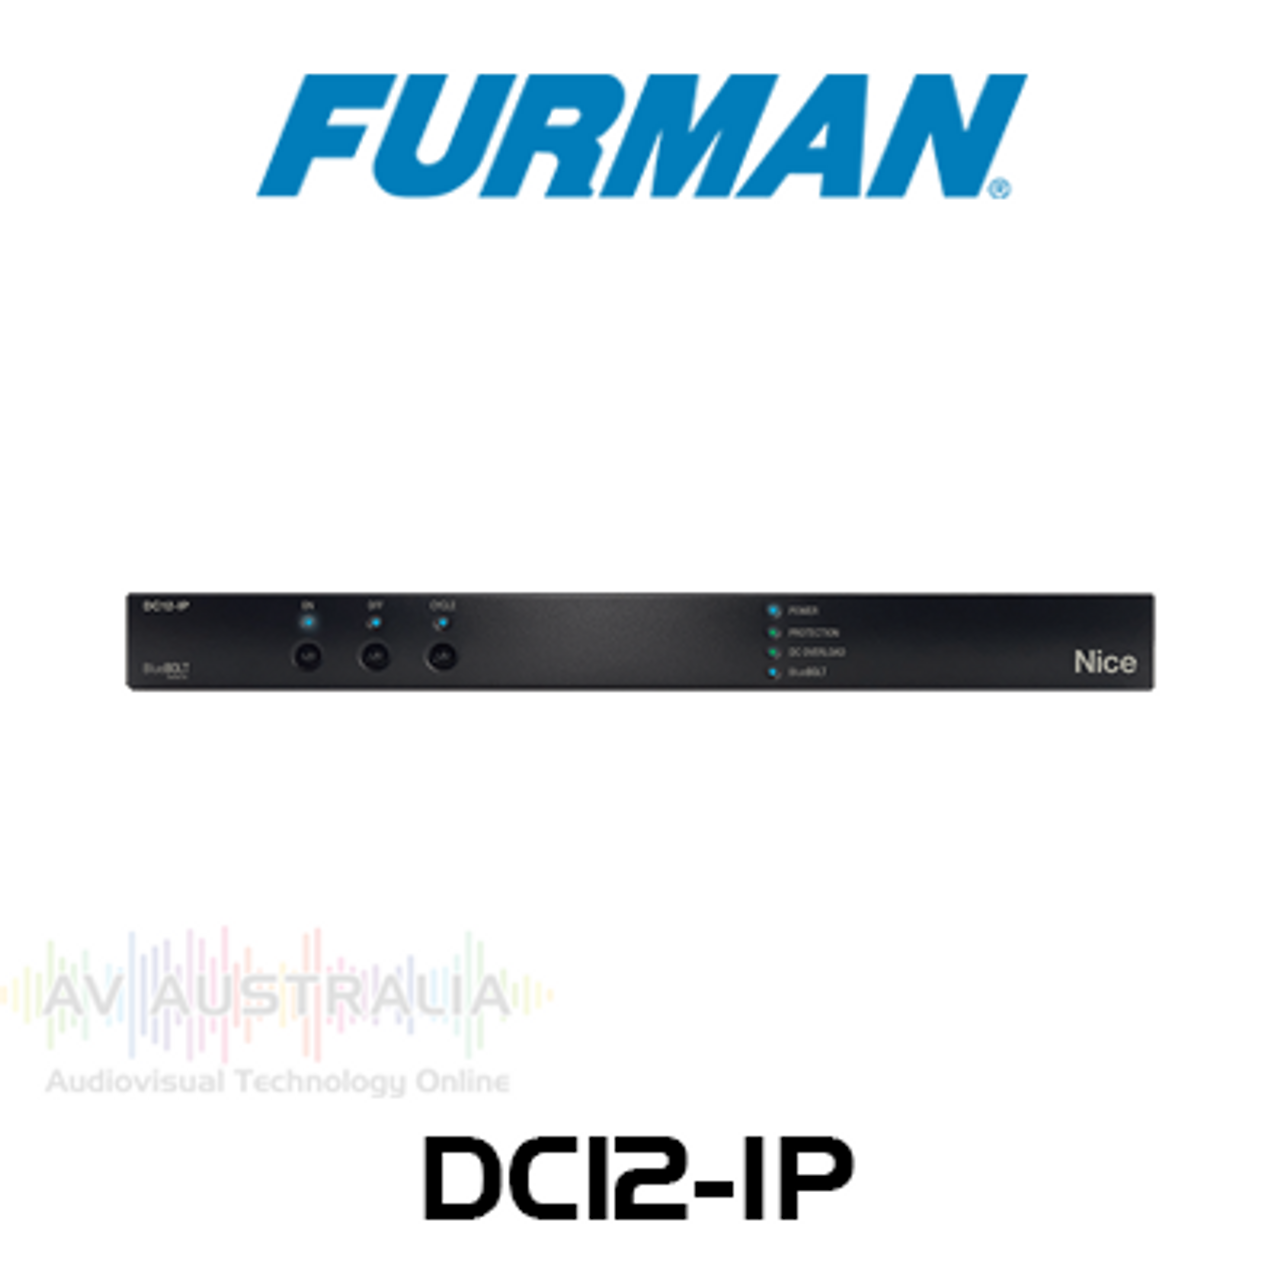 Furman DC12-IP BlueBOL Enabled Smart DC Power Manager